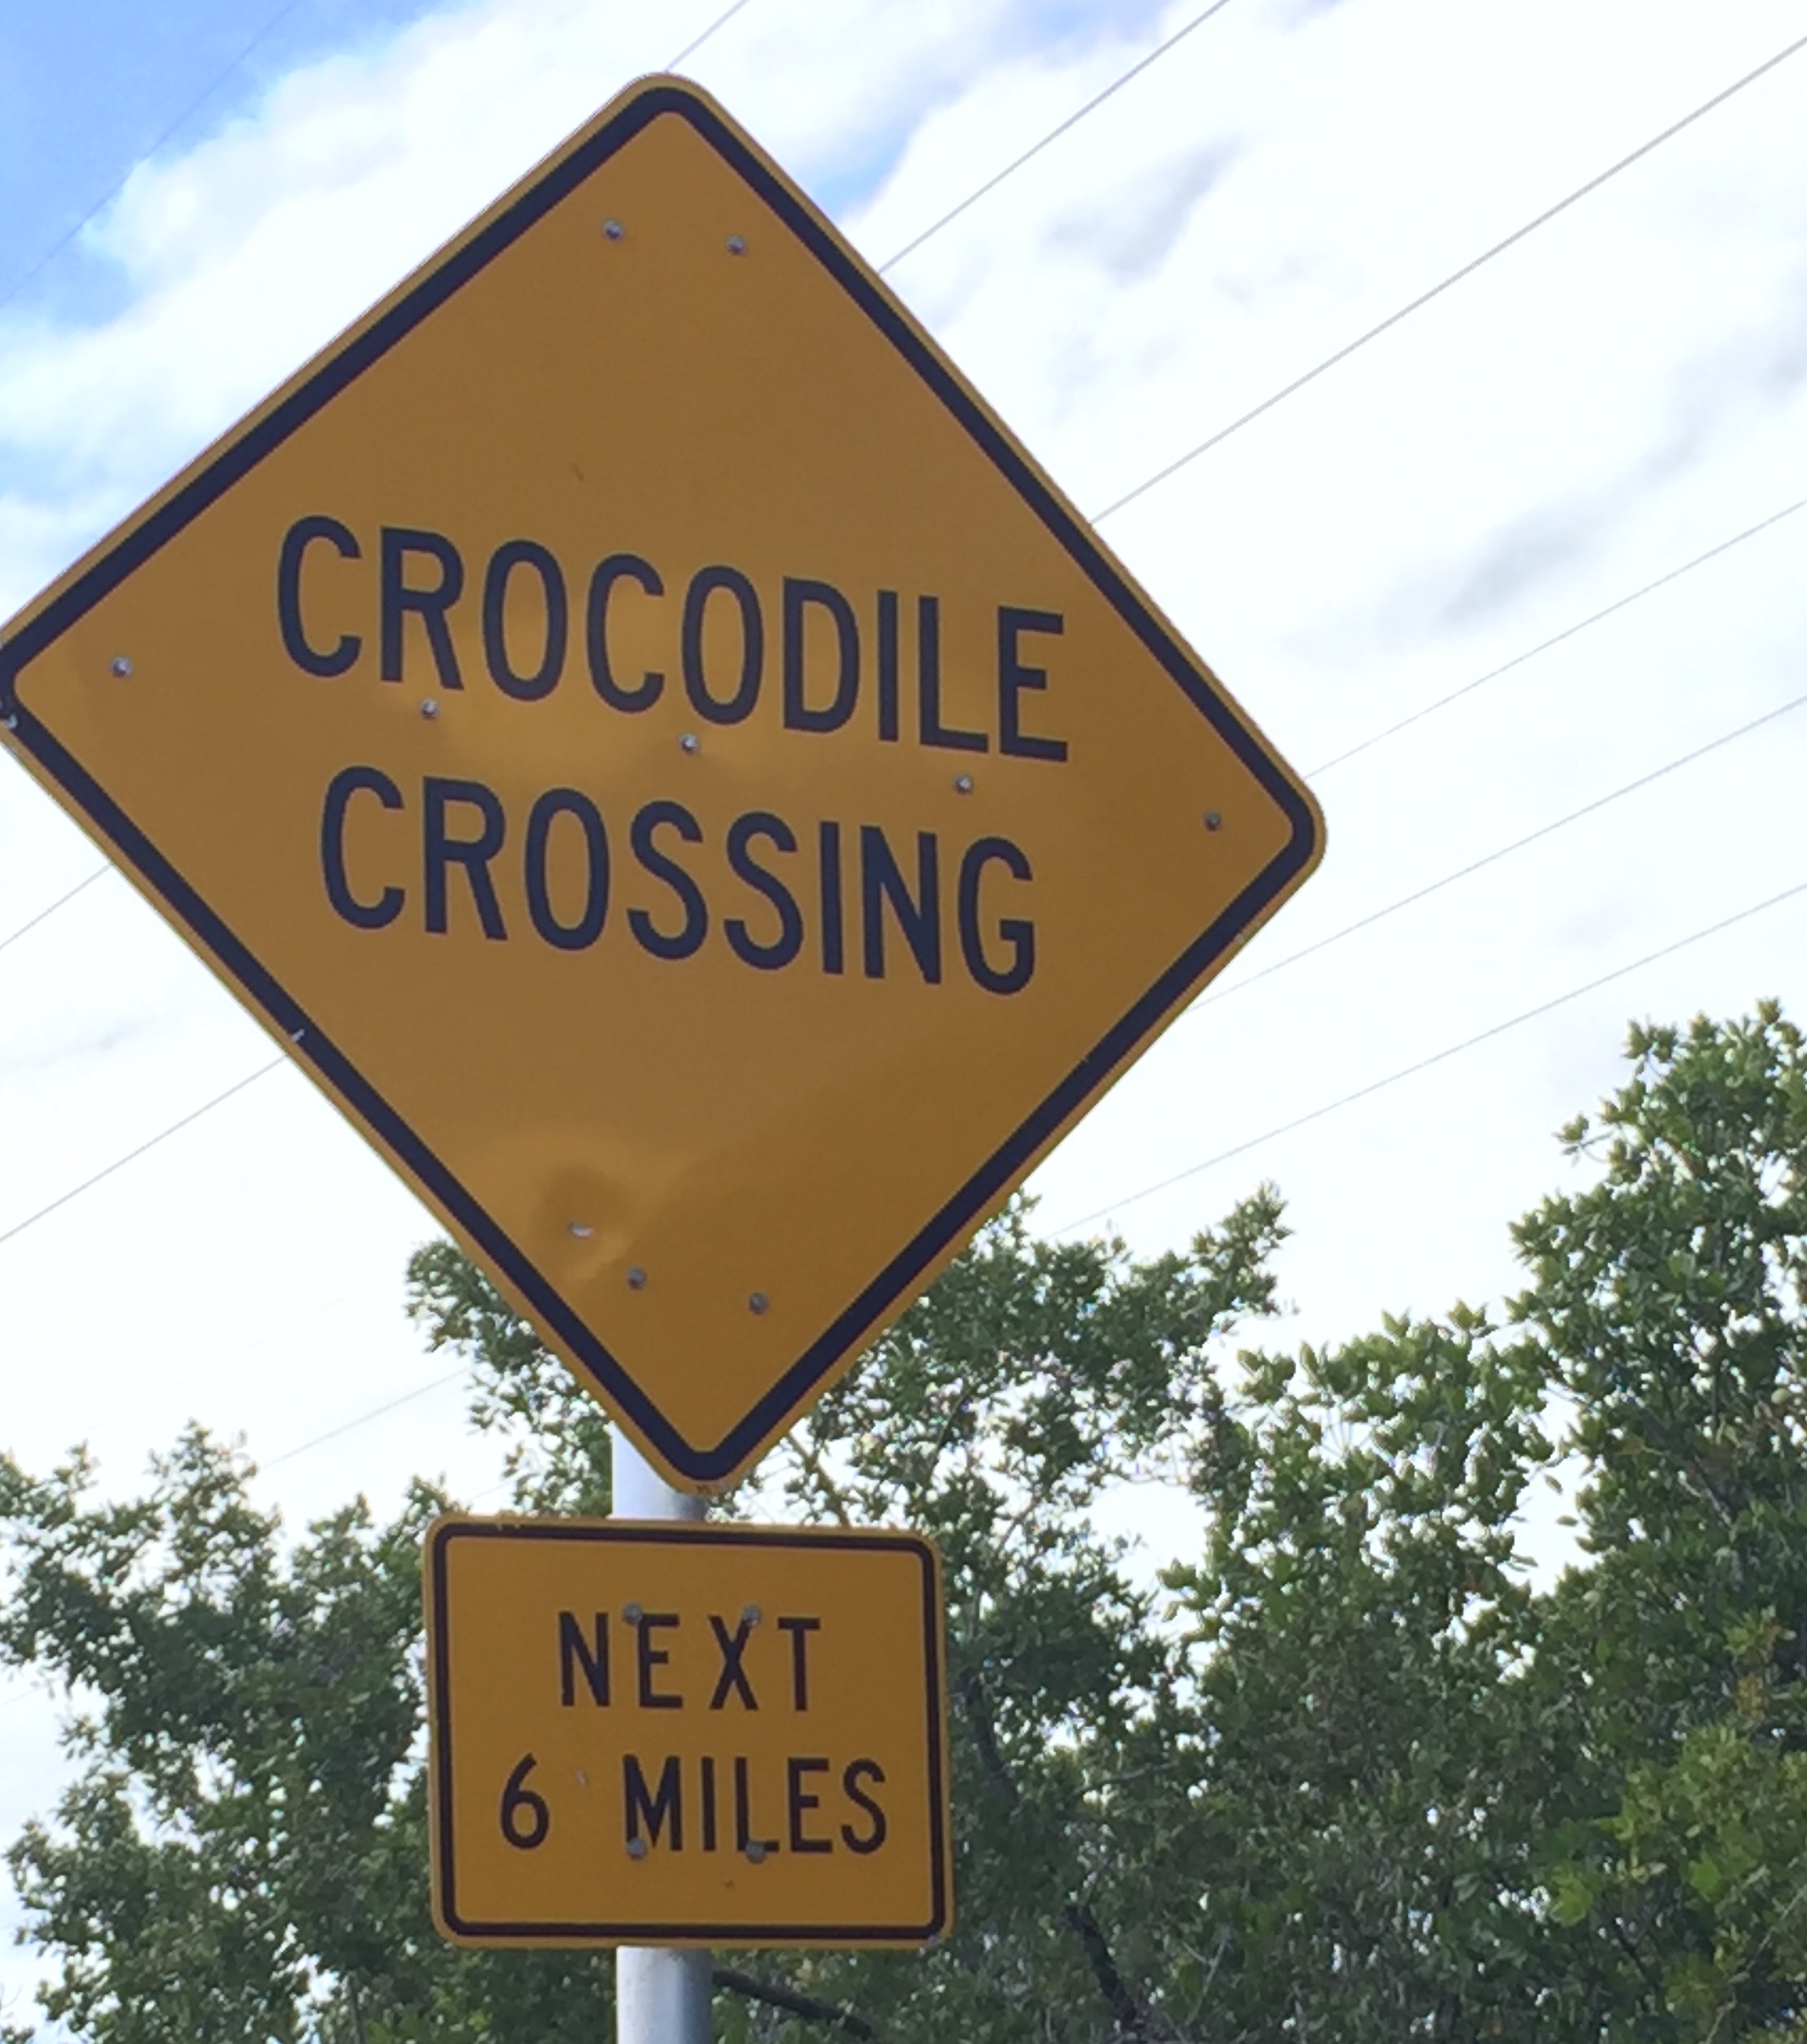 Crocodile crossing